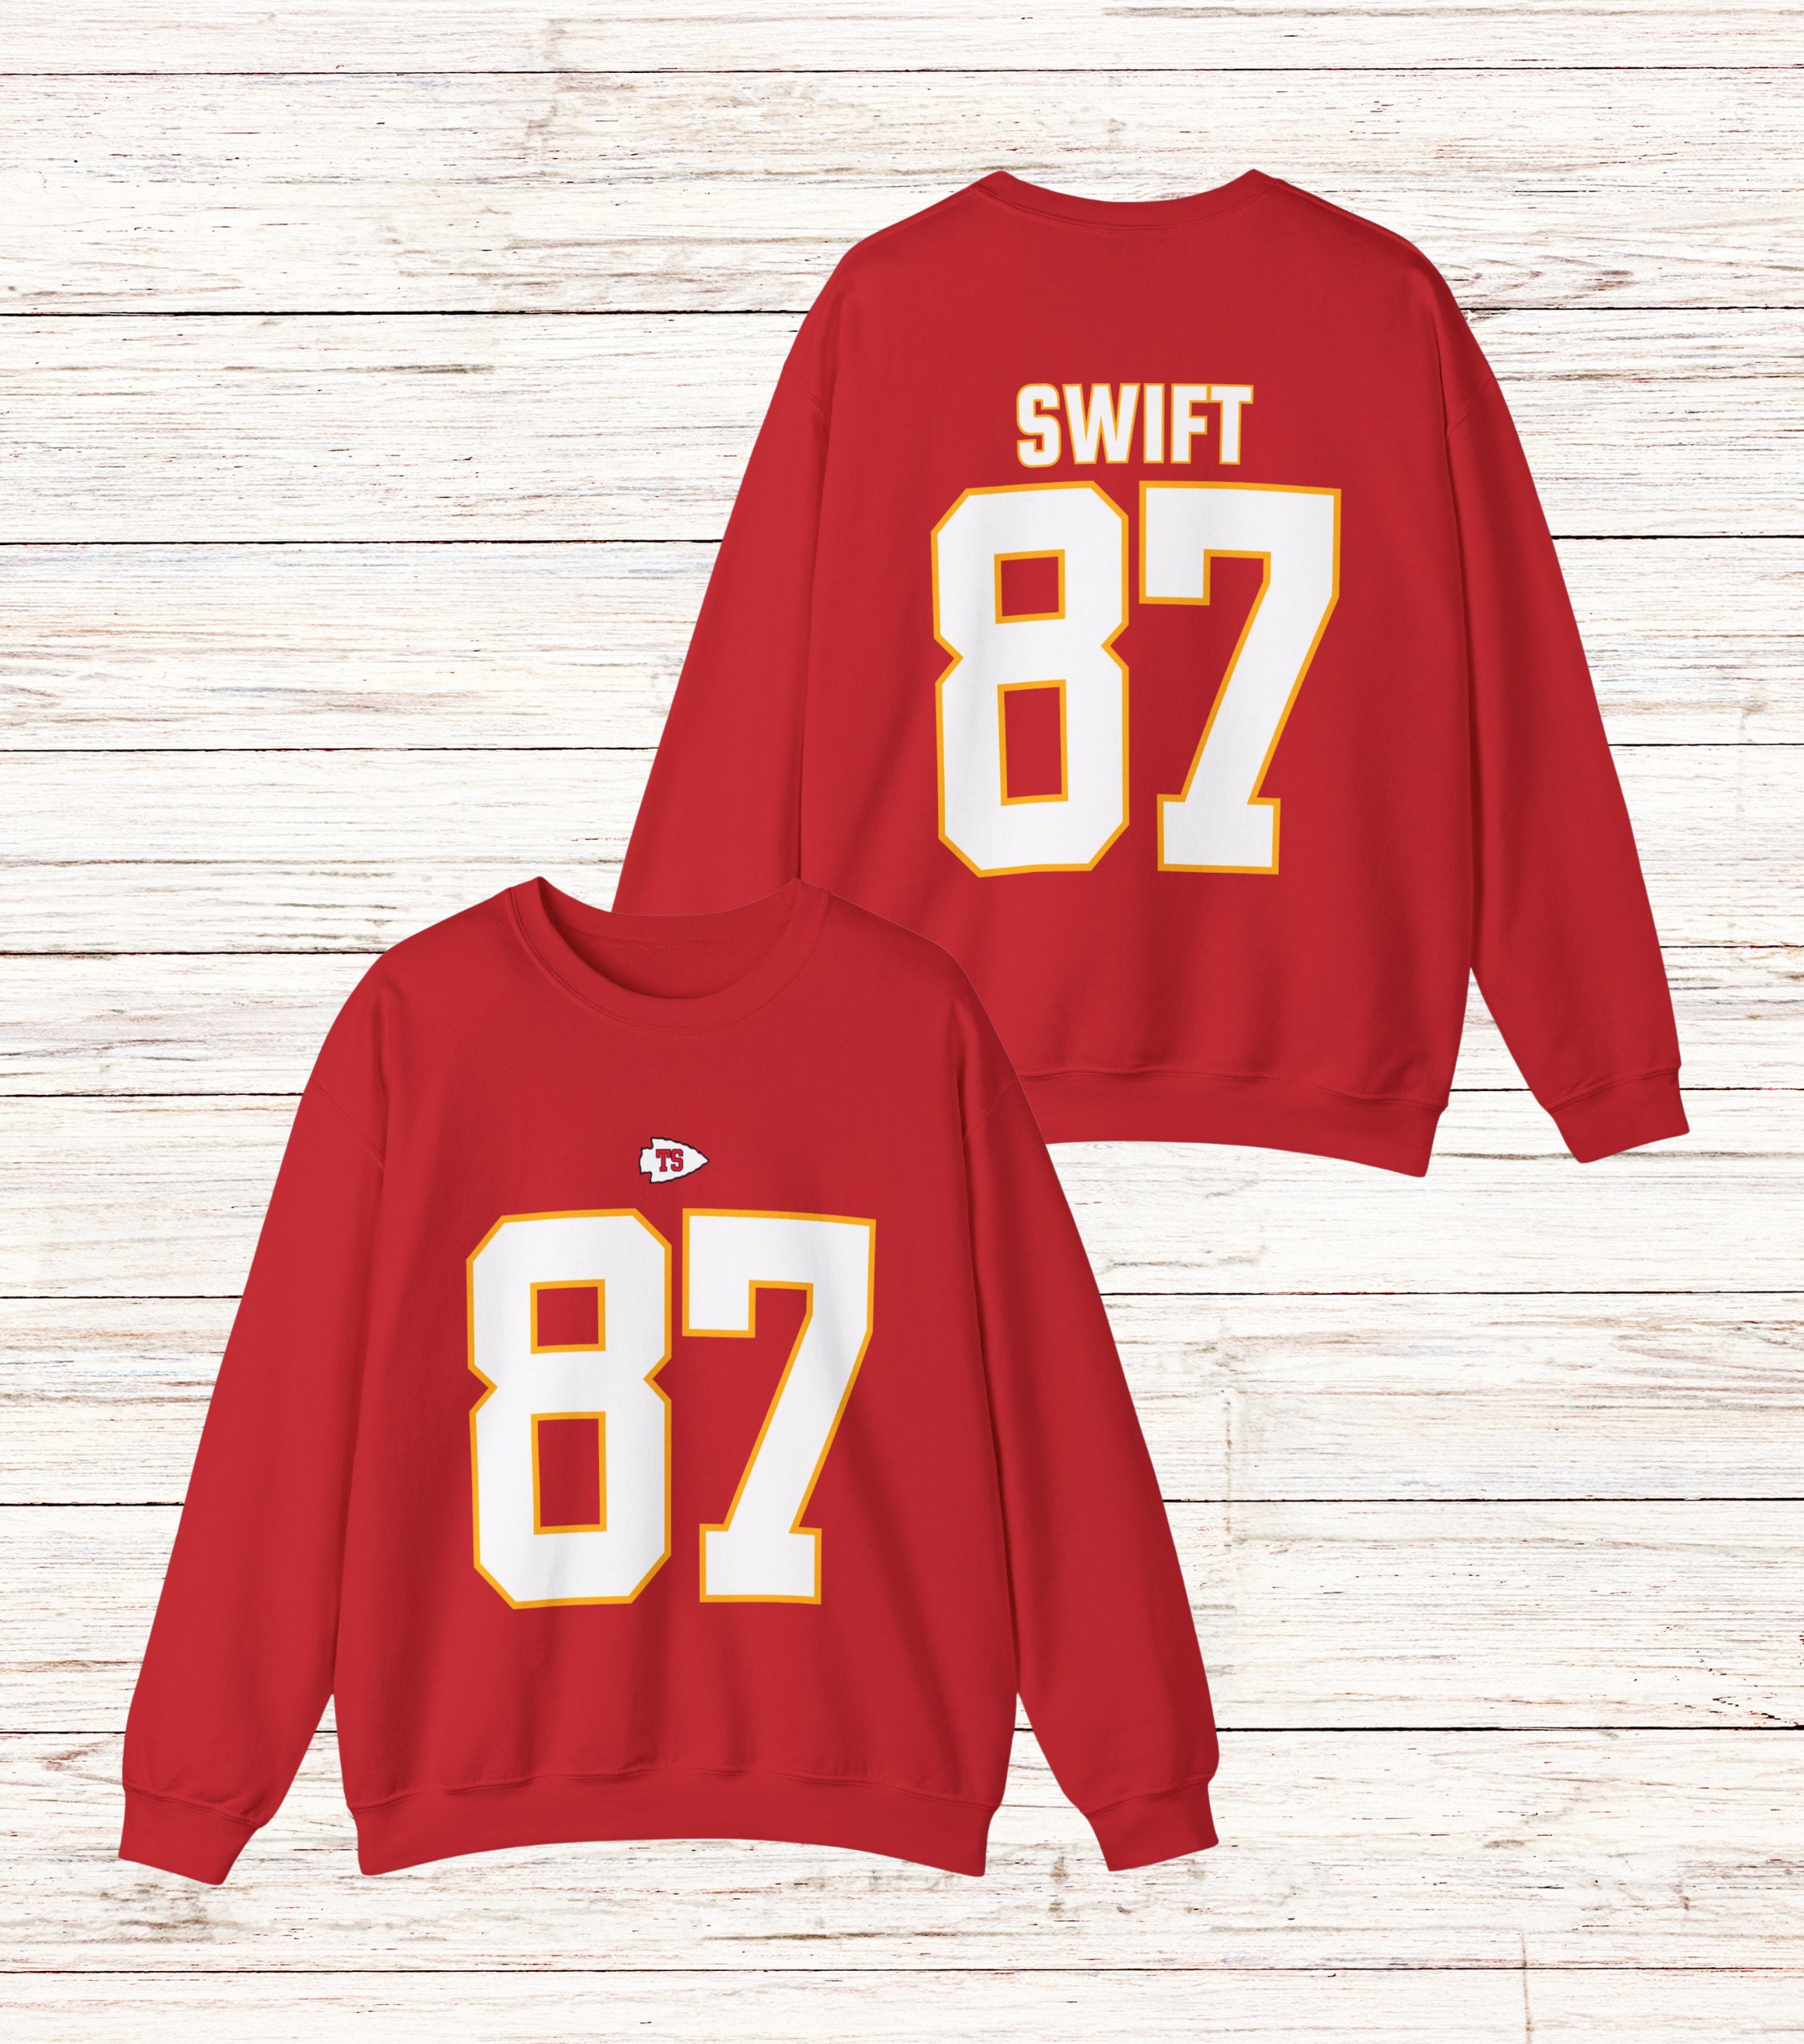 Discover Taylor And Travis Kelce Sweatshirt, Go Taylor's Boyfriend Sweatshirt